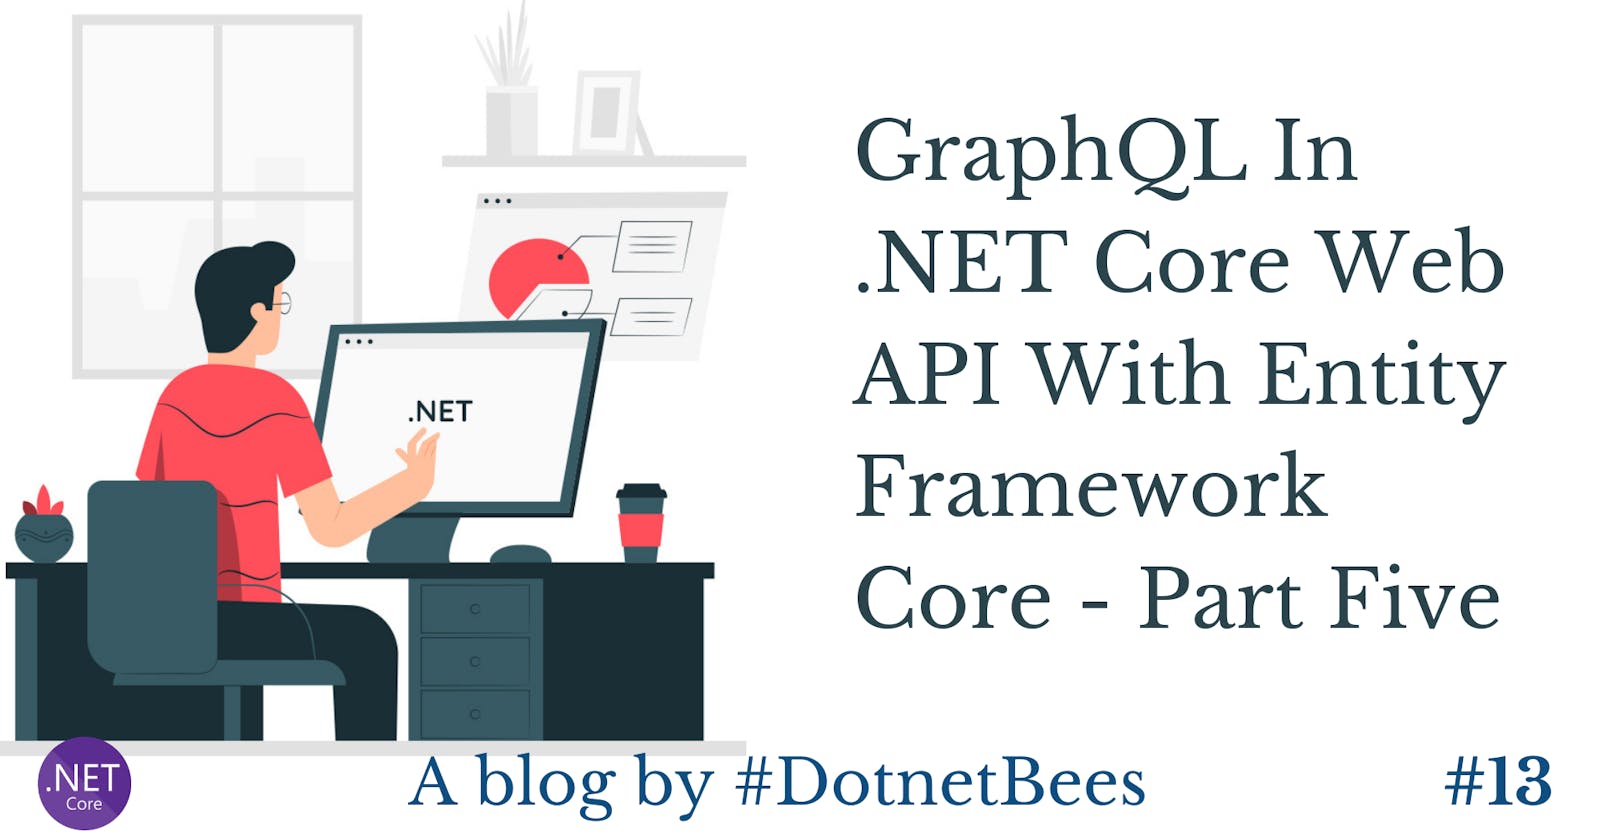 GraphQL In .NET Core Web API With Entity Framework Core - Part Five